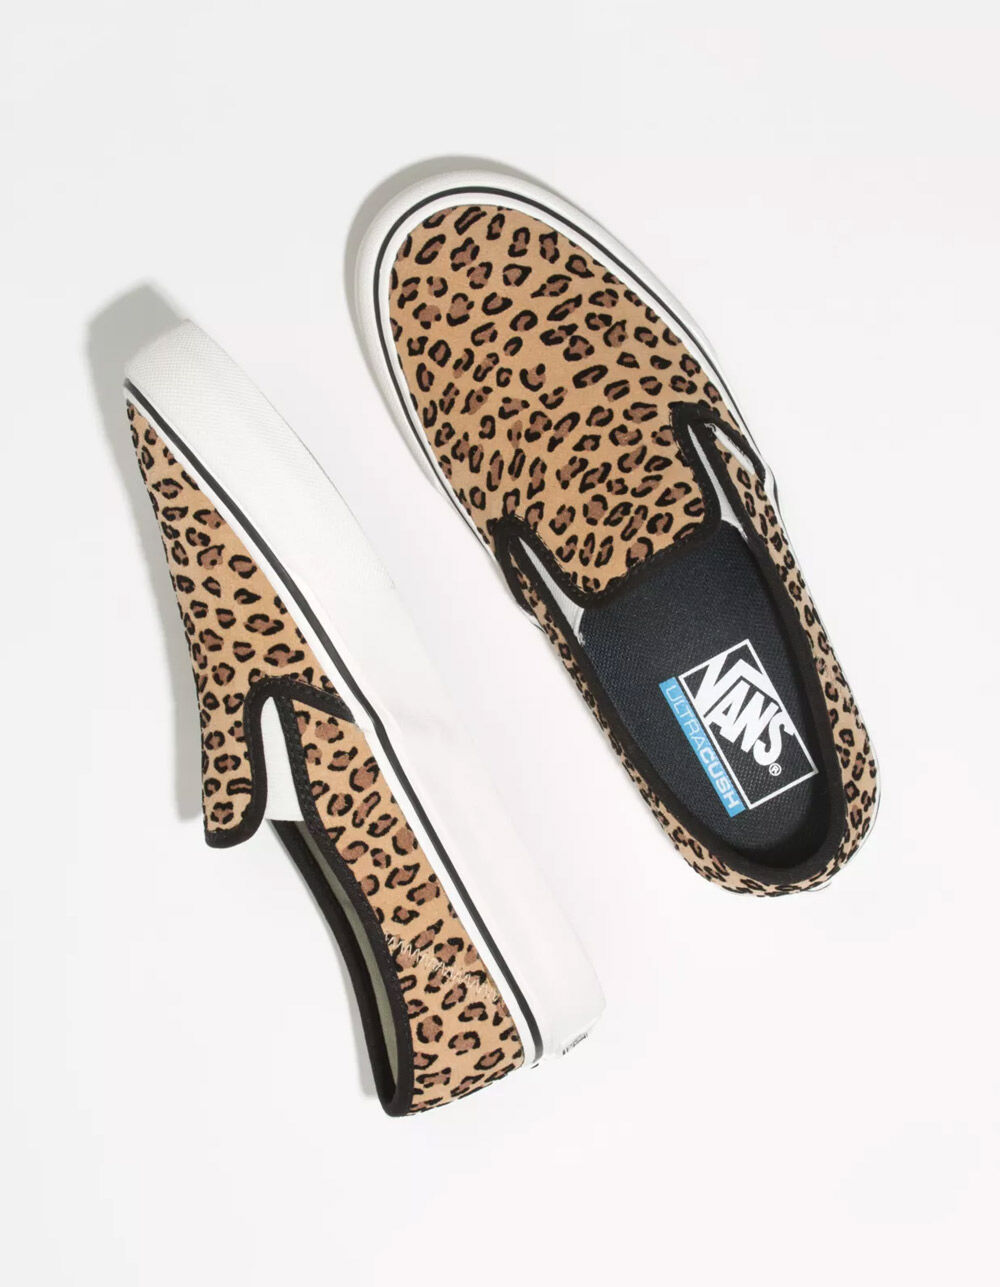 VANS Leopard Slip-On SF Womens Shoes - LEOPARD | Tillys